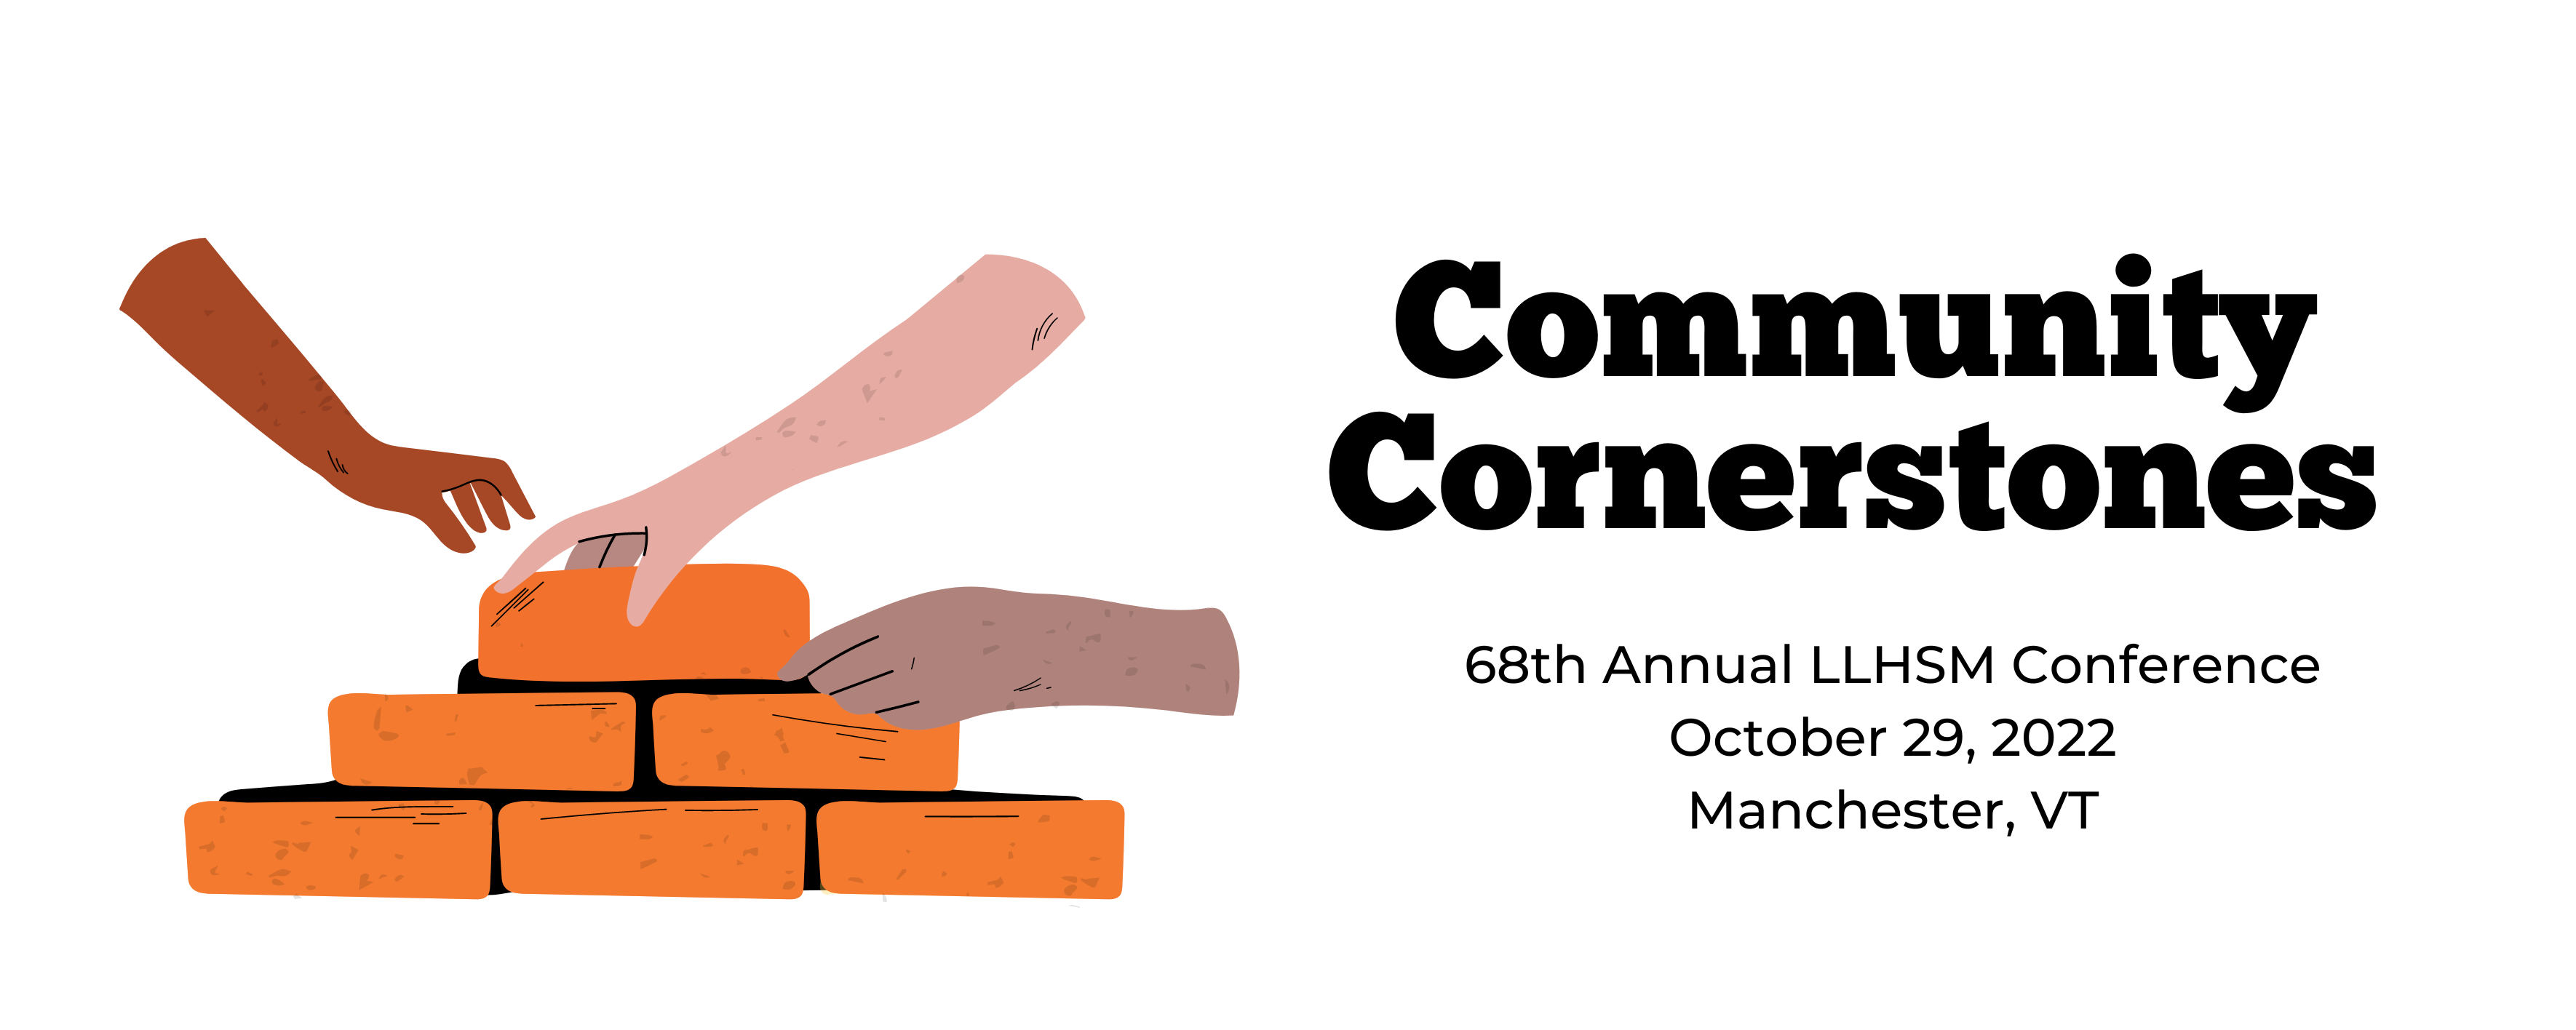 Community Cornerstones, 68th Annual LLHSM Conference